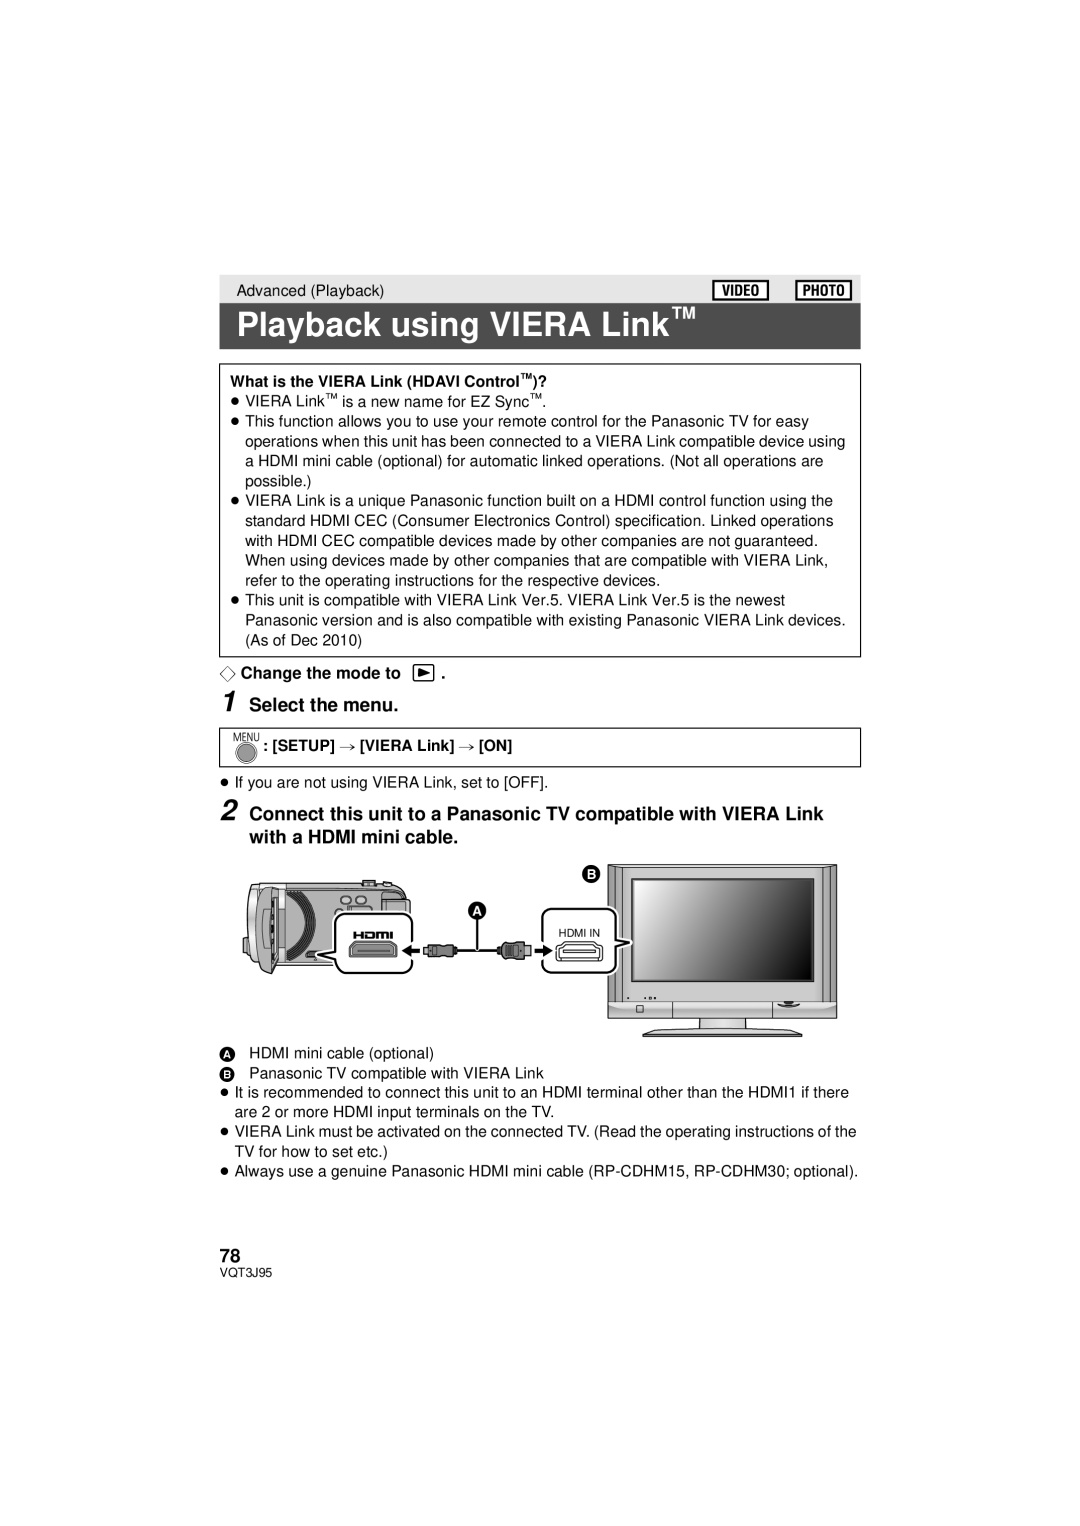 Panasonic HDC-SD40P/PC Playback using VIERA Link, Select the menu, ¬ Change the mode to, SETUP # VIERA Link # ON 